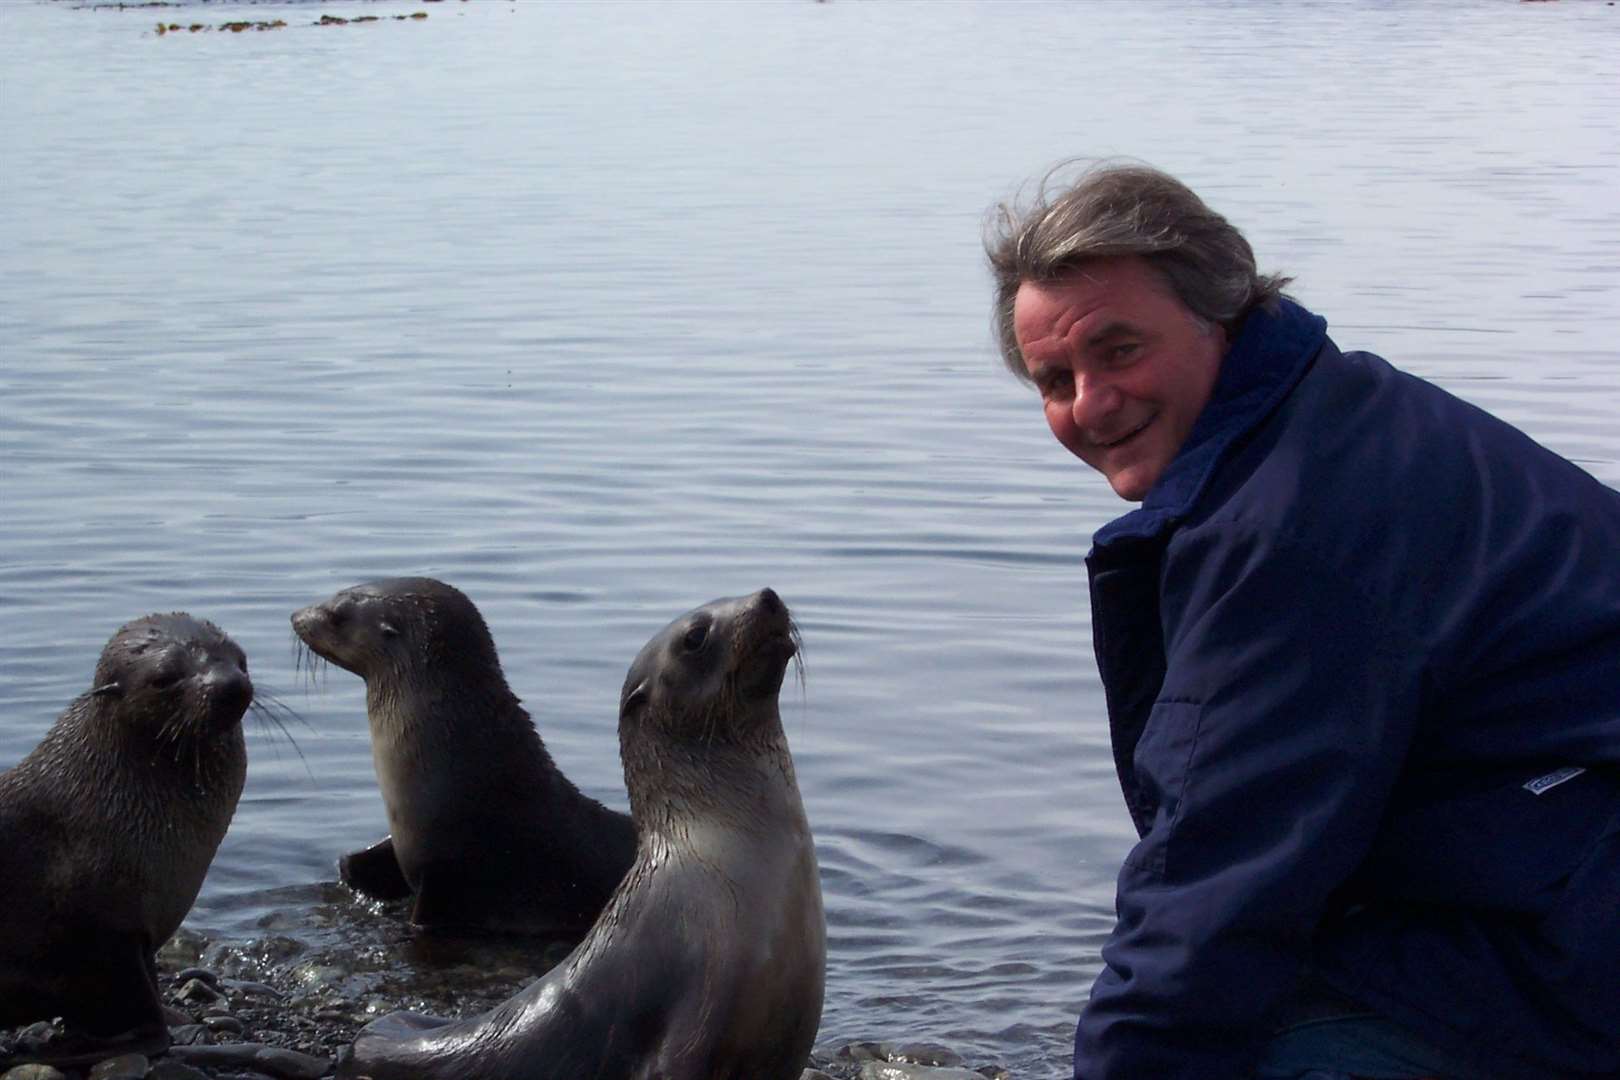 David Virgo in Antarctica, with seals